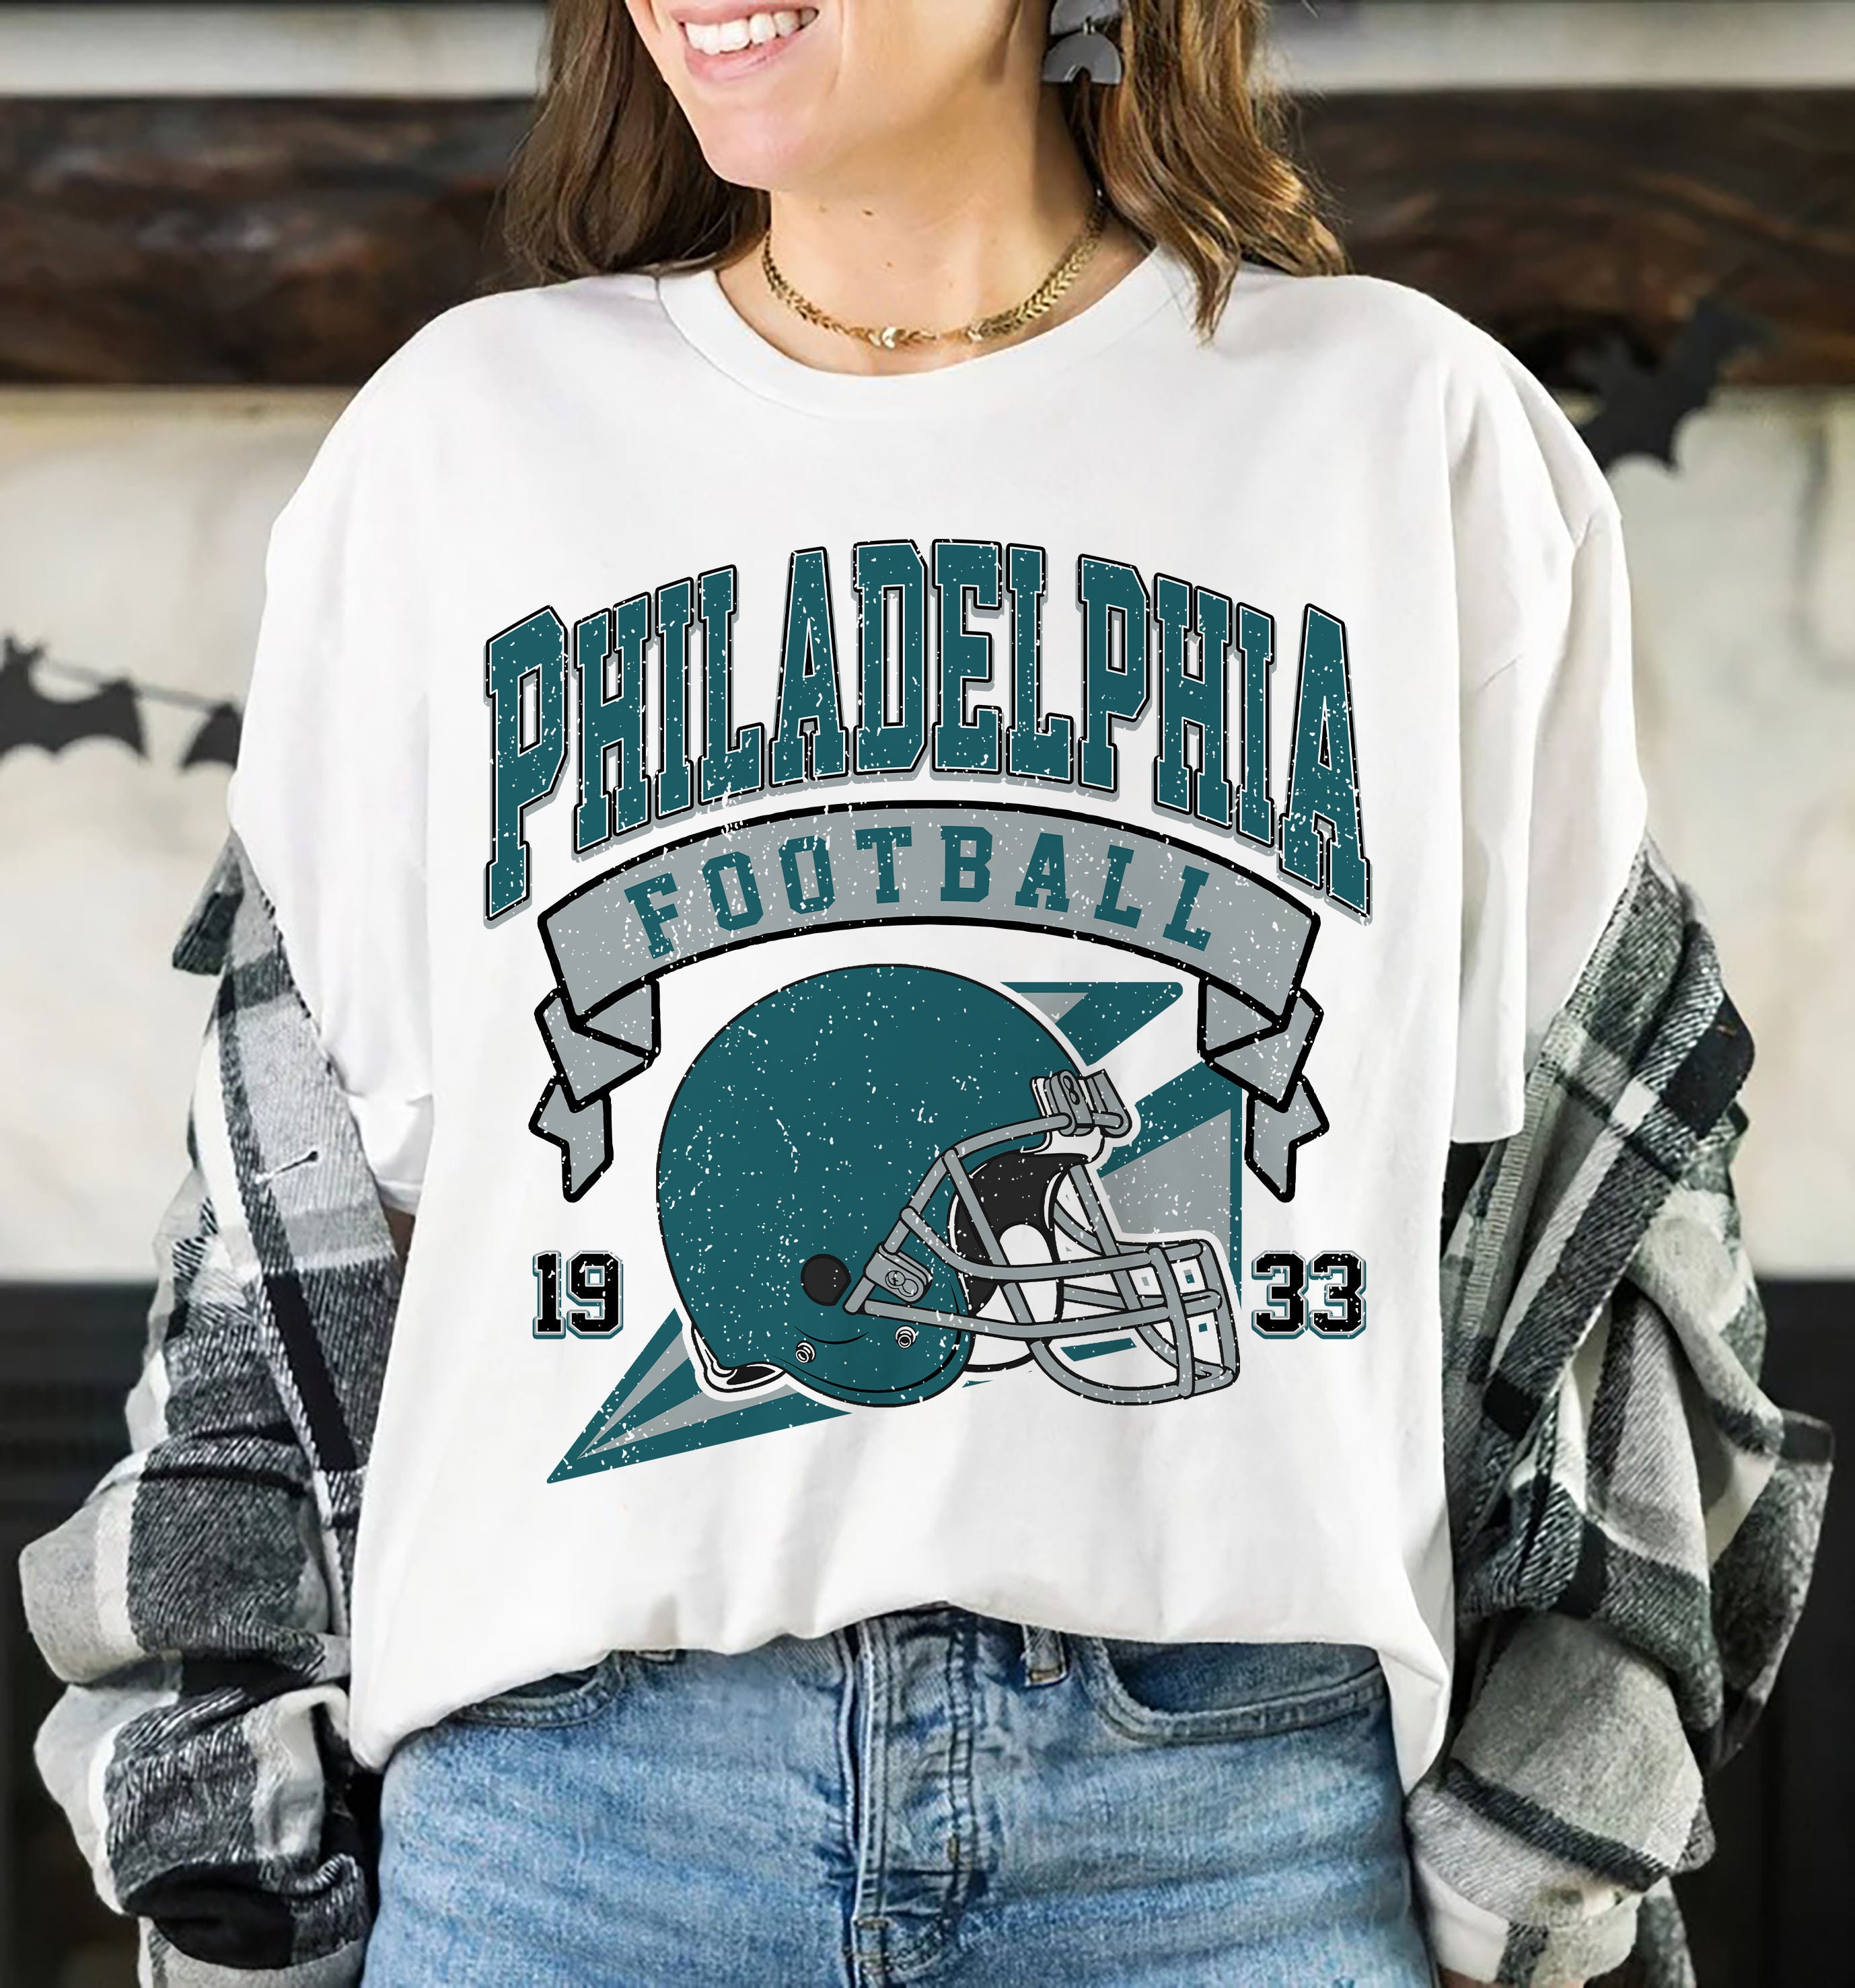 Vintage Philadelphia Eagles Sweatshirt Go Birds Phillies T Shirt  Philadelphia Eagles Toddler Shirt Philadelphia Eagles Vintage T Shirt Nfl  Shop NEW 